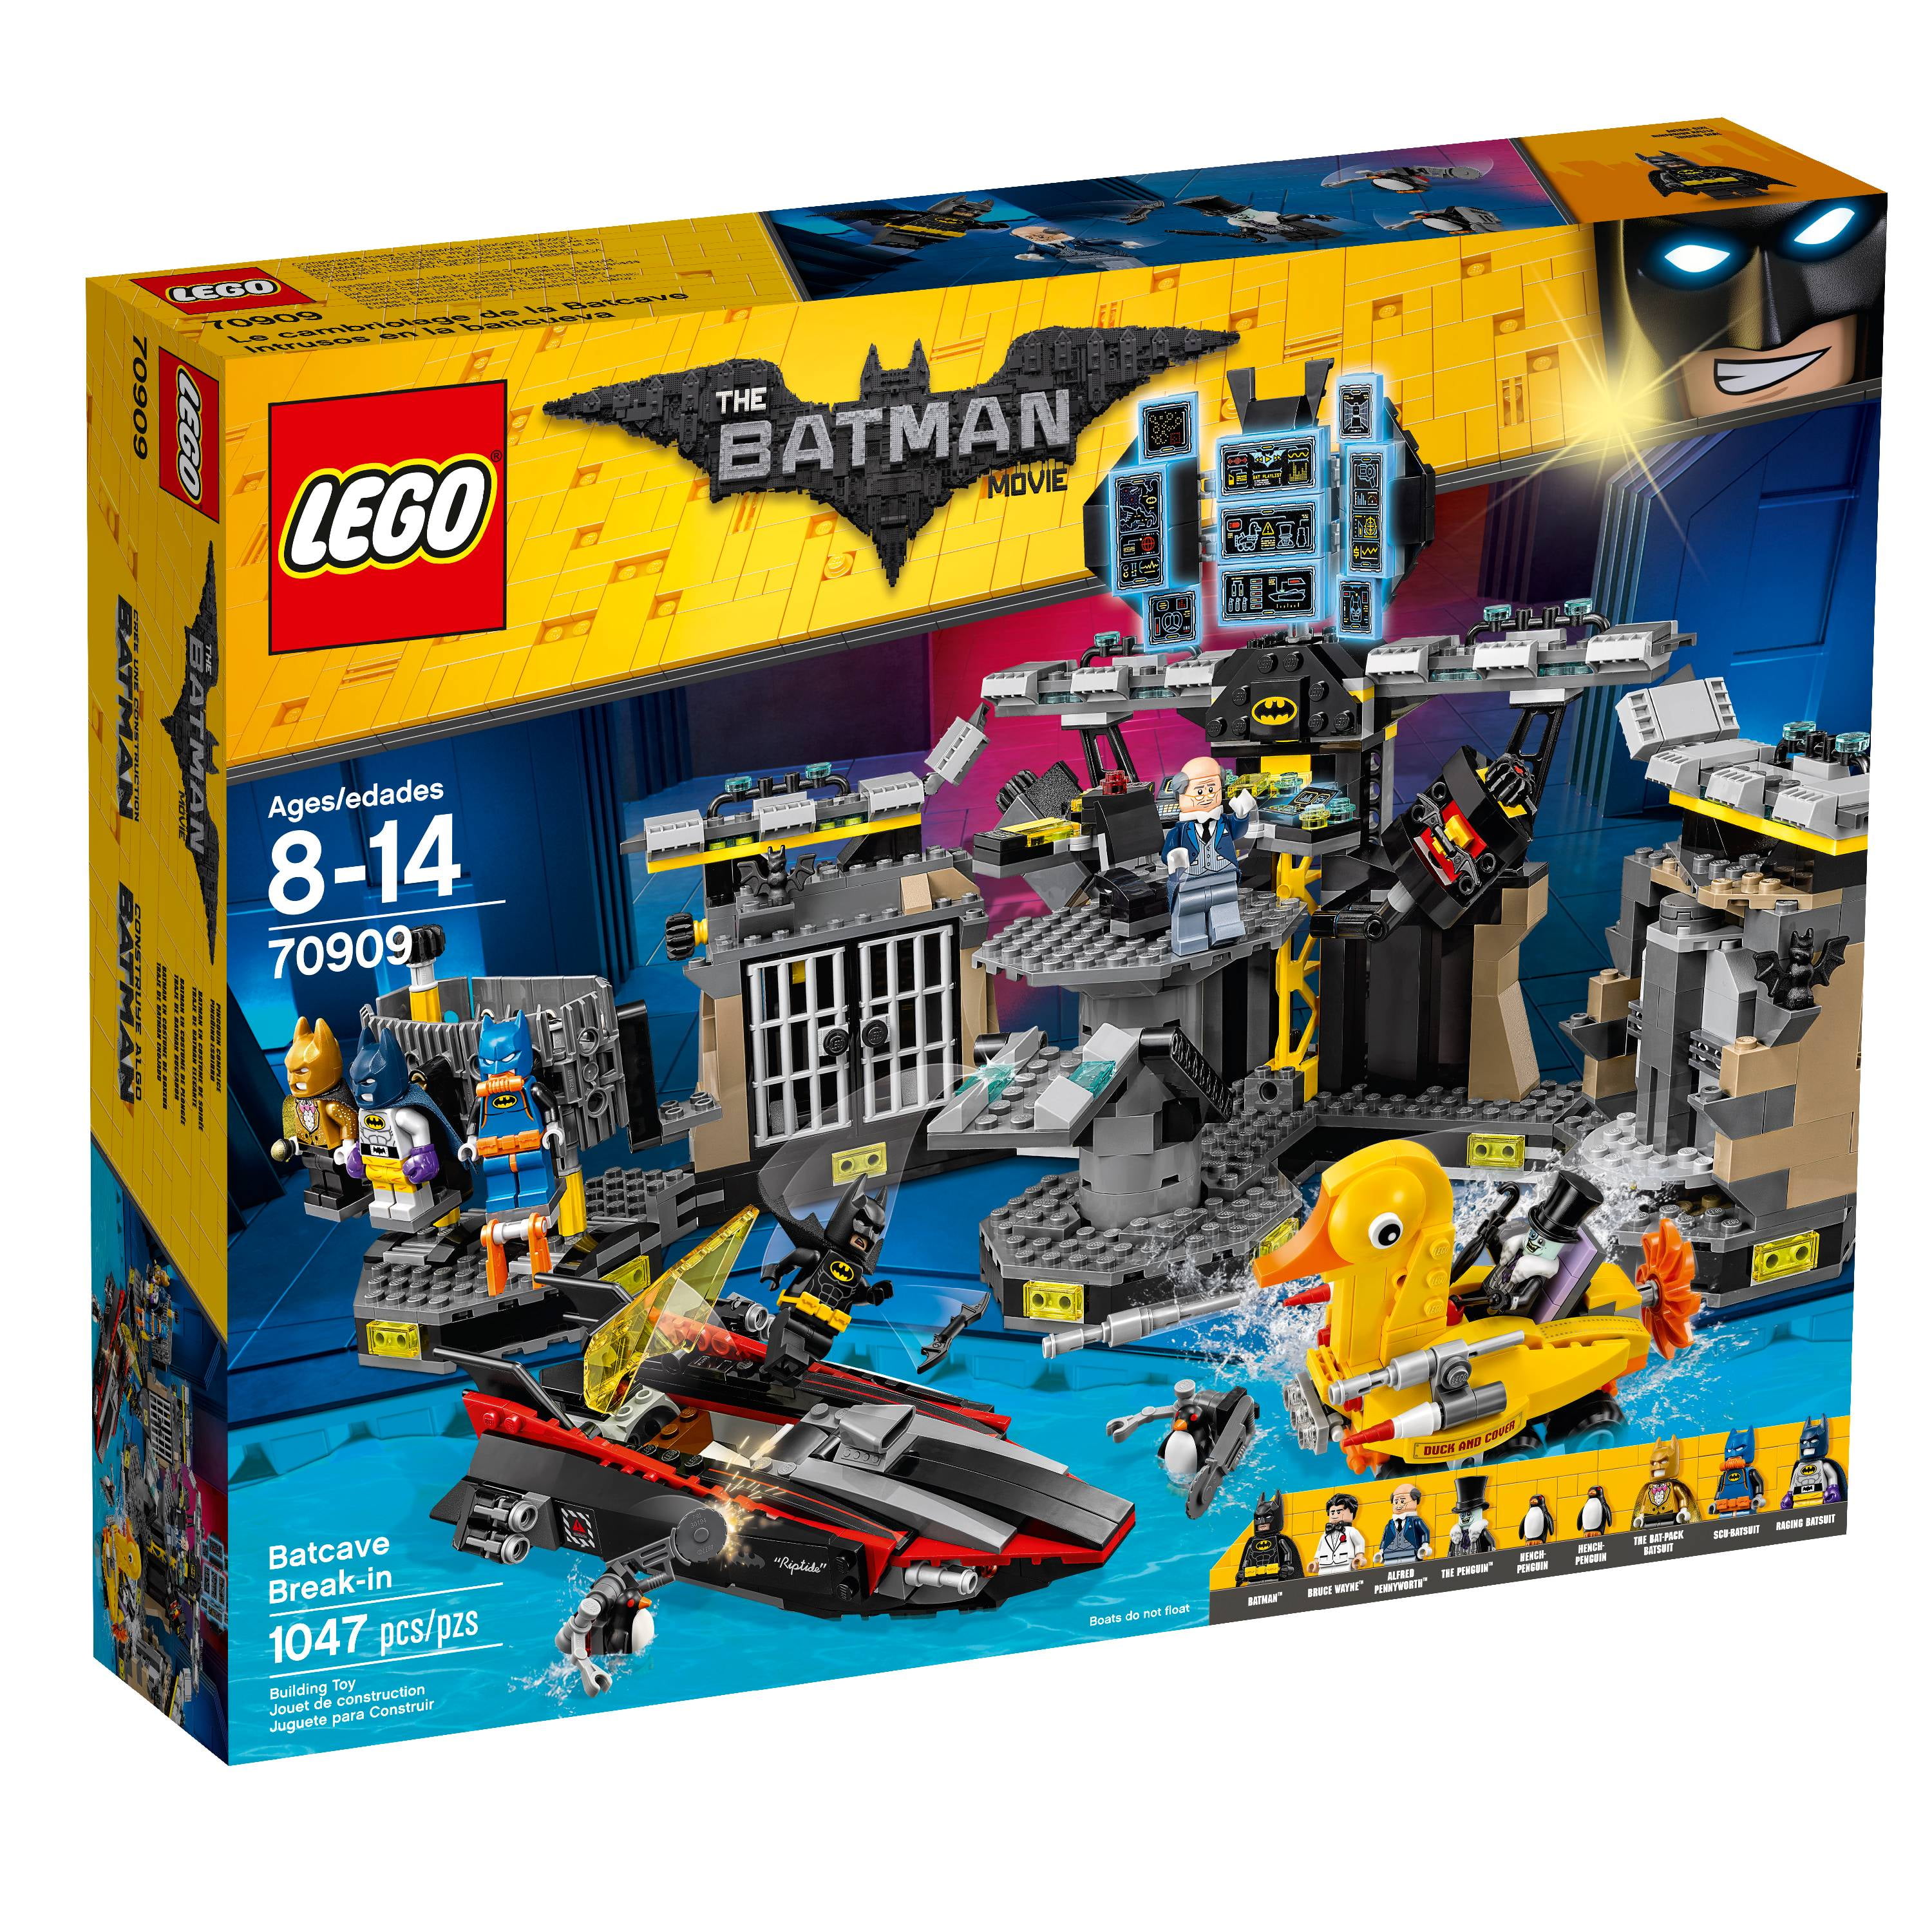 LEGO Batman Movie 70909 Batcave Break-in - Entertainment Earth